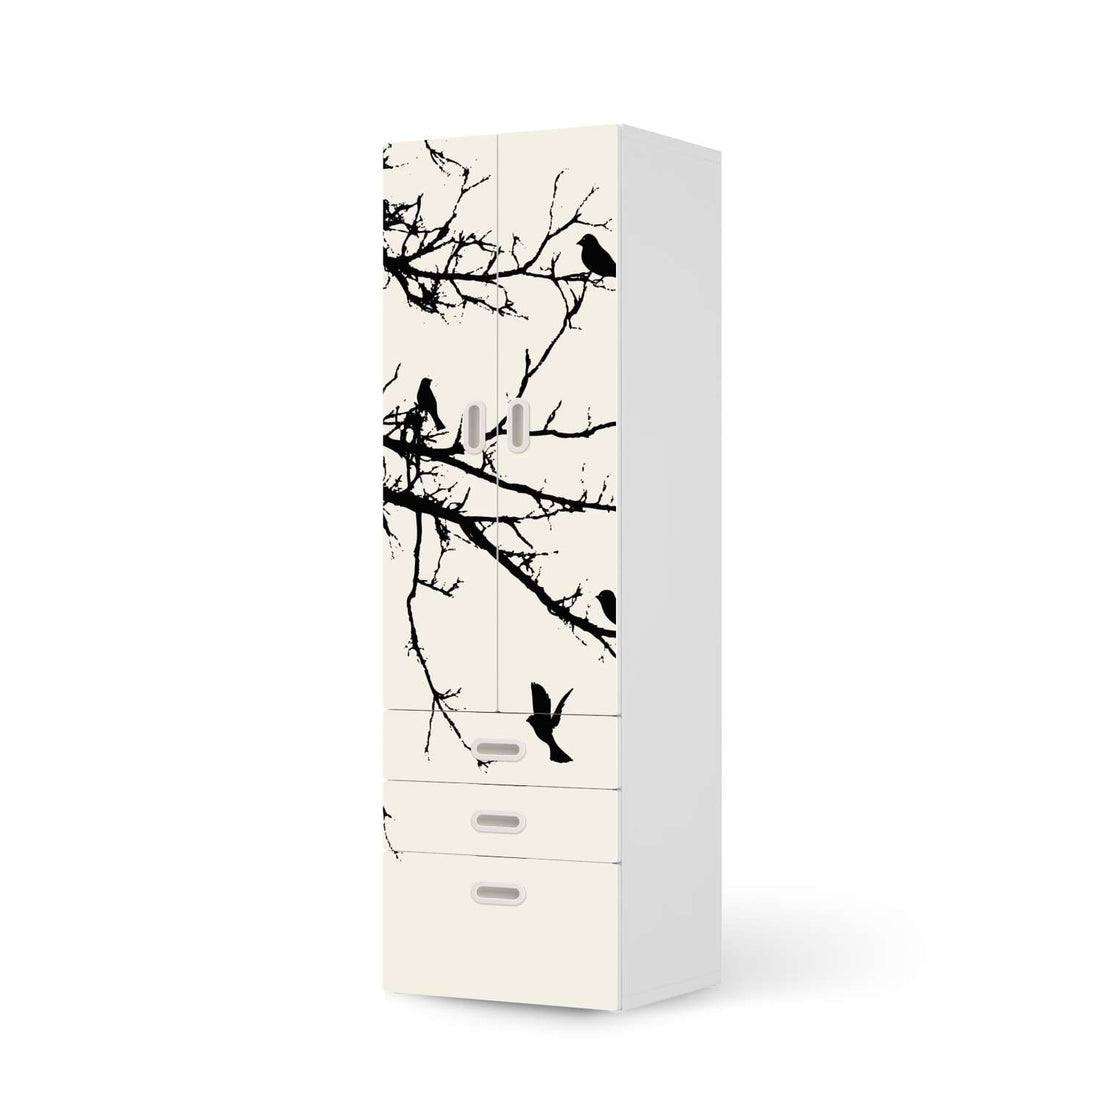 Klebefolie Tree and Birds 1 - IKEA Stuva / Fritids kombiniert - 3 Schubladen und 2 große Türen  - weiss